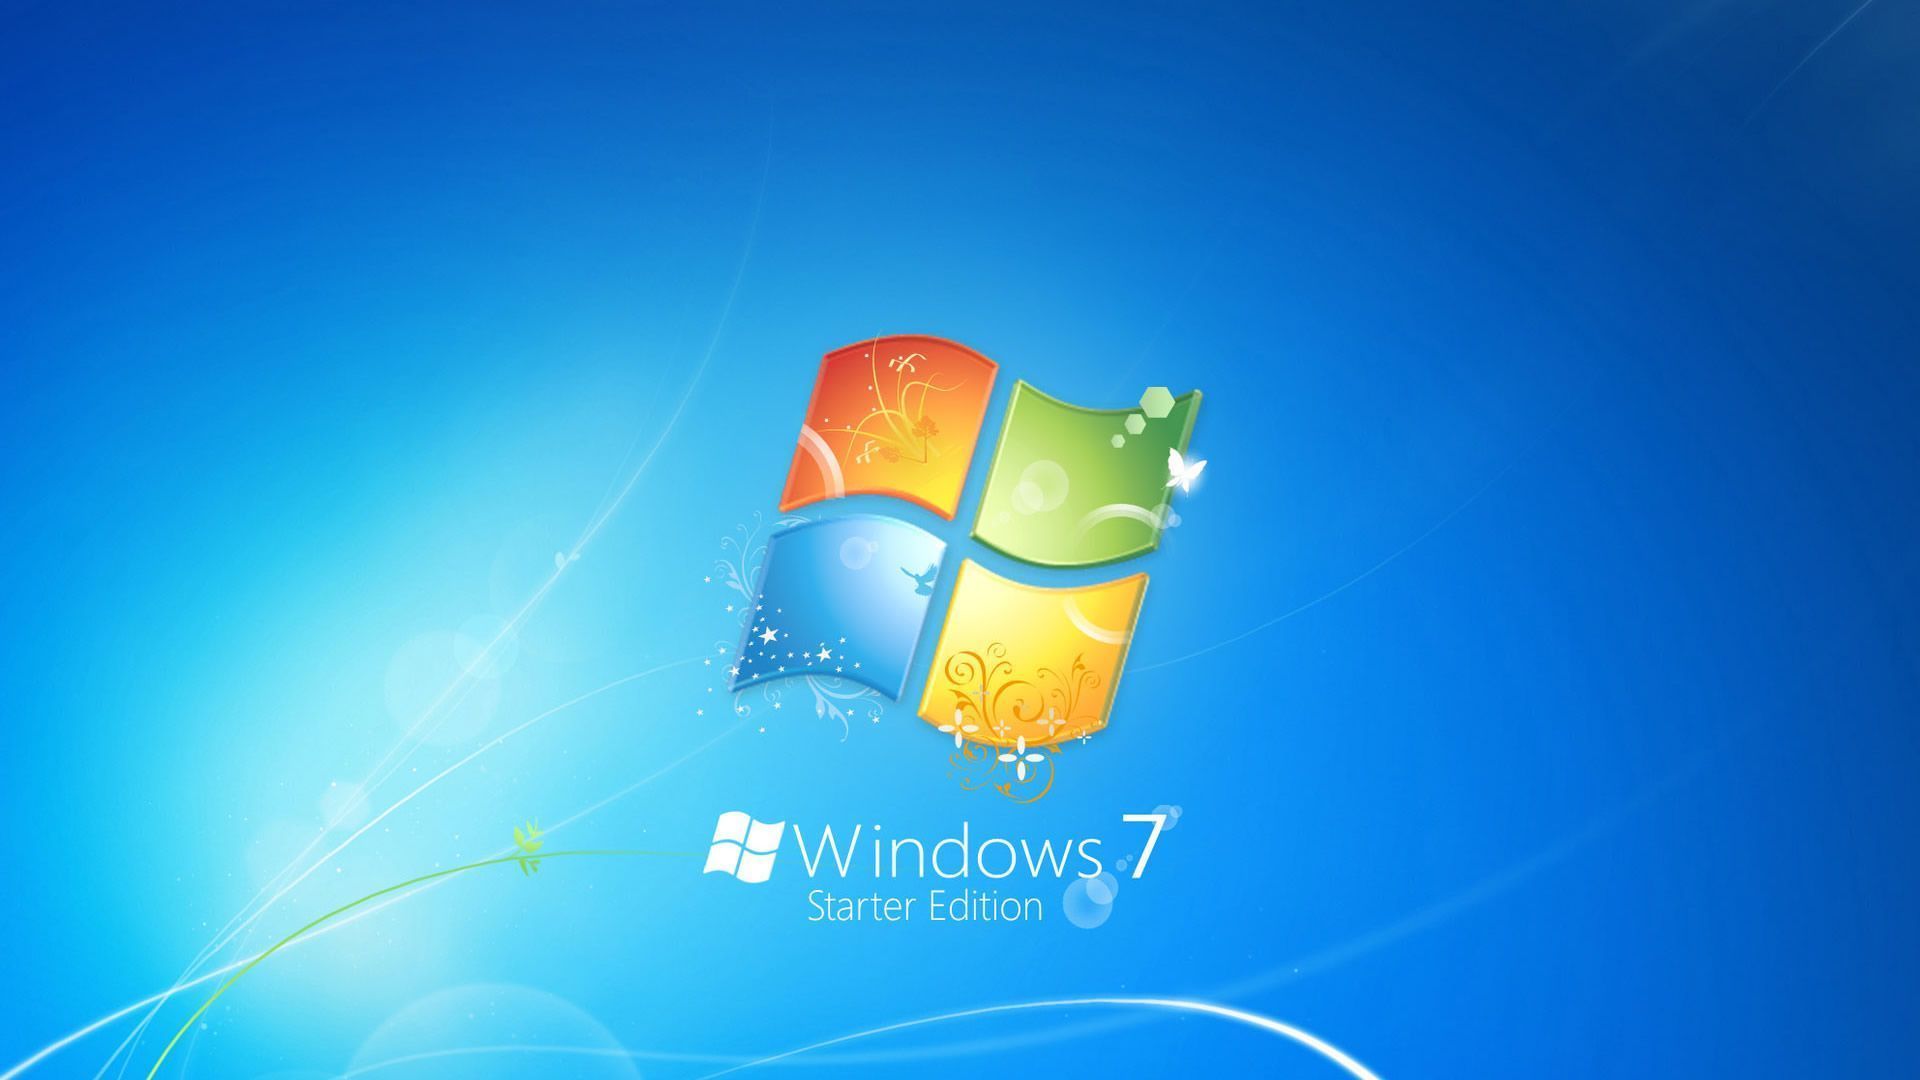 Windows 7 Backgrounds Desktop - Wallpaper Cave